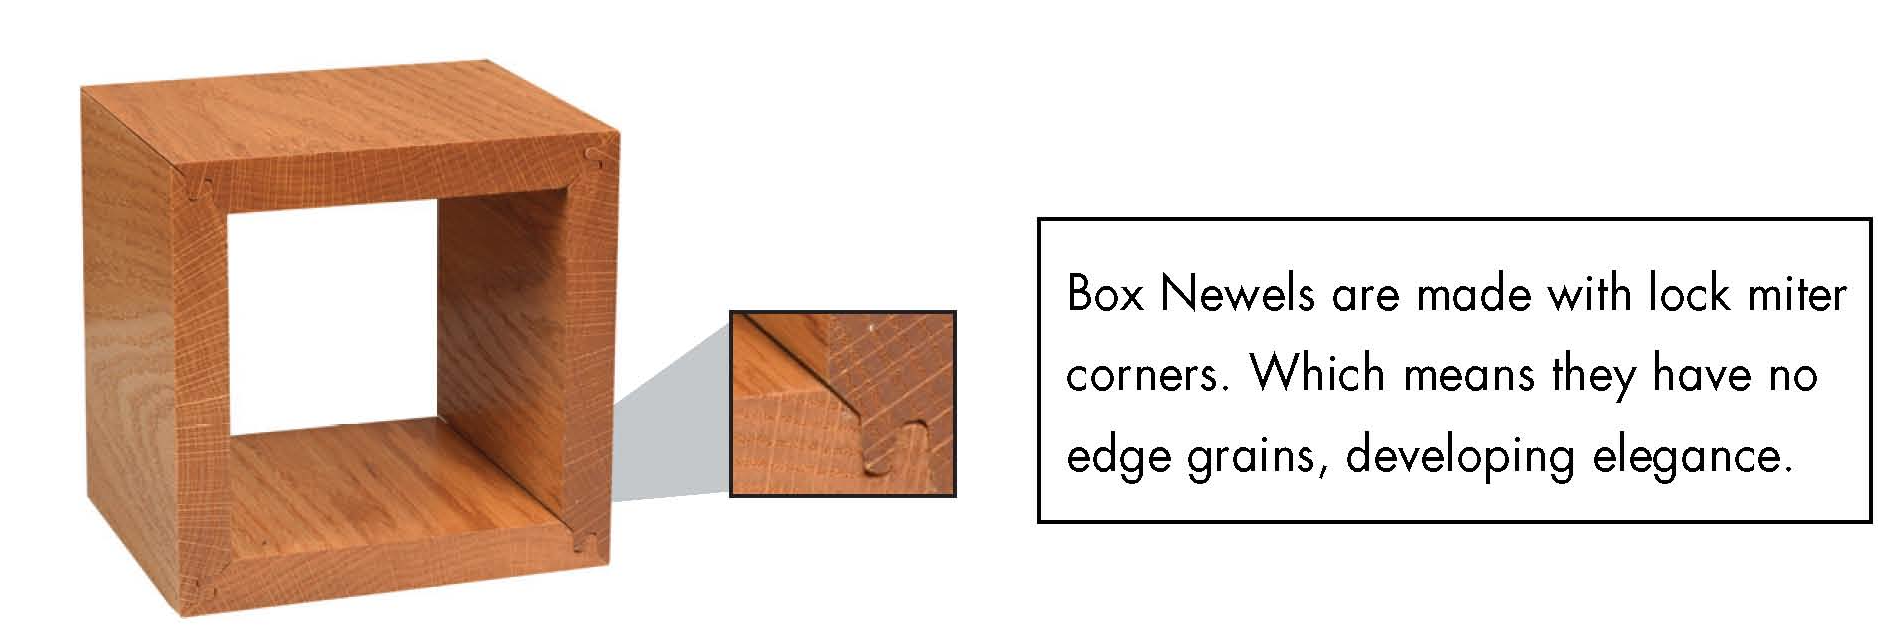 Box Newels with Lock Mitered Corners